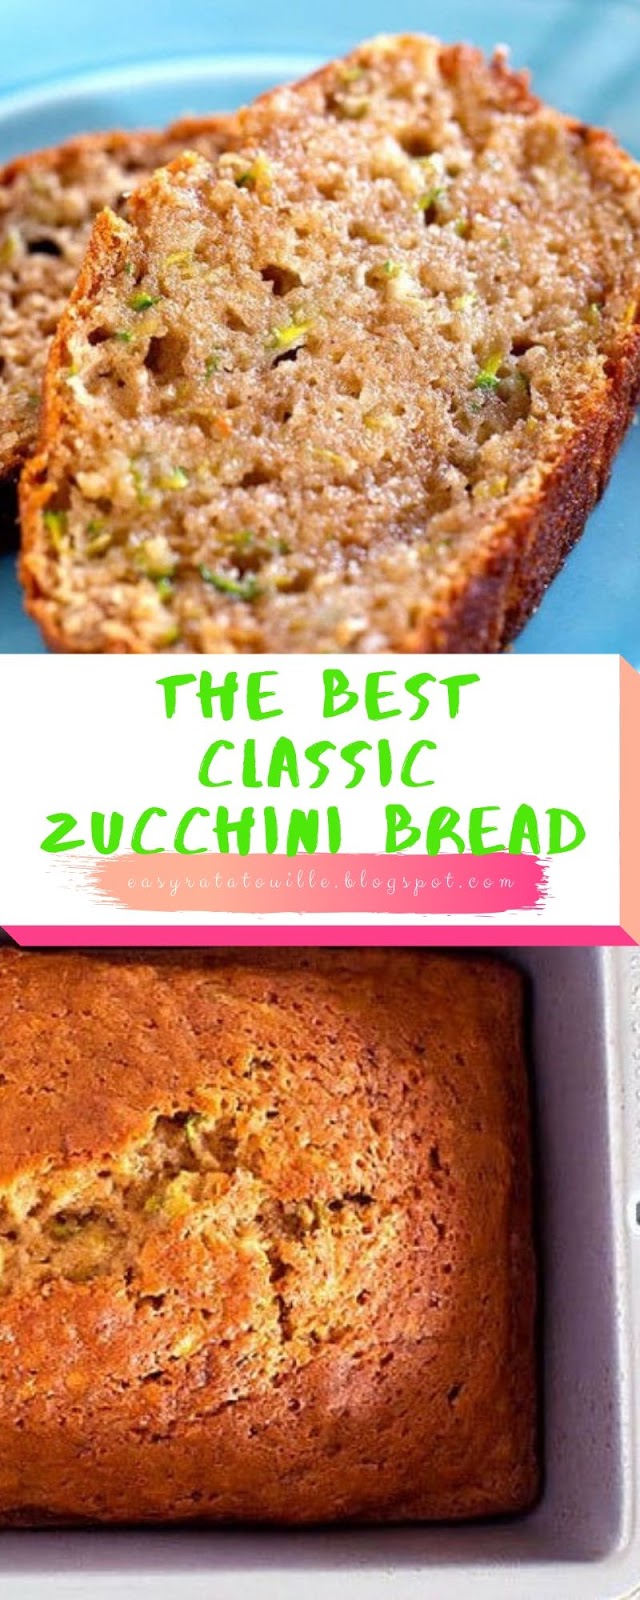 The Best Classic Zucchini Bread